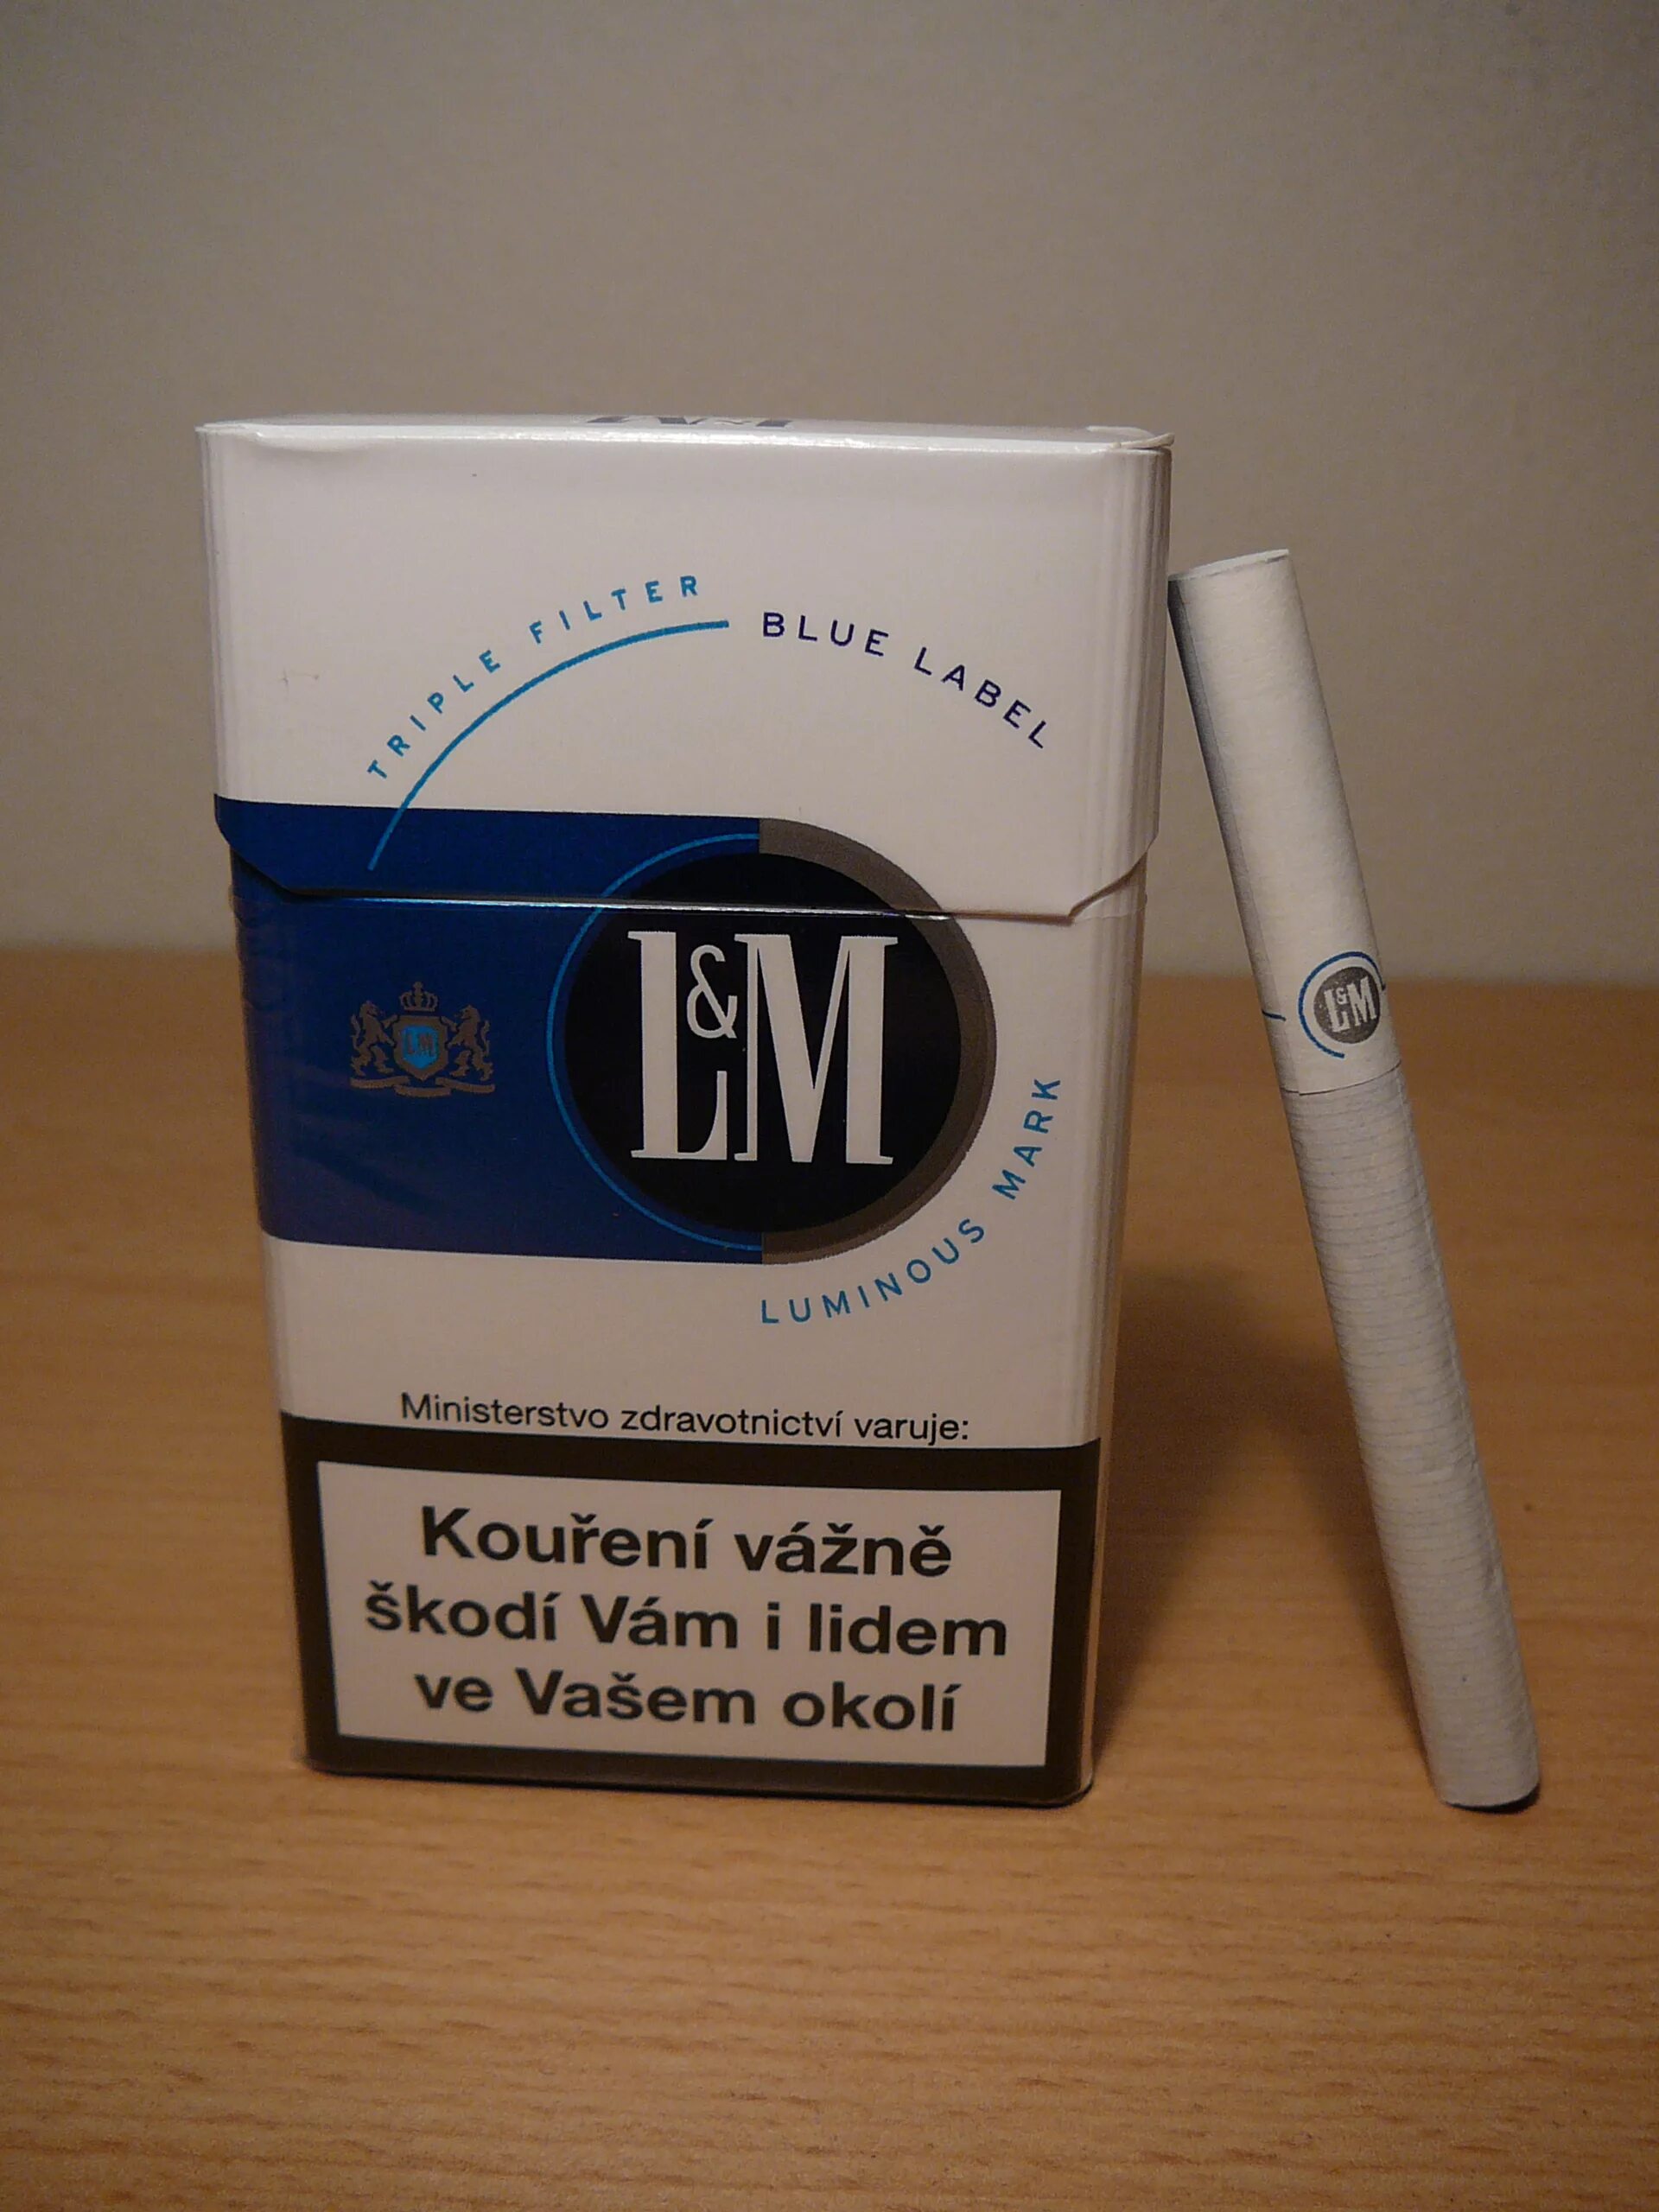 Сигареты компакт белые. Сигареты лм синие. Сигареты лм компакт. LM Compact Blue. LM Blue Label сигареты.